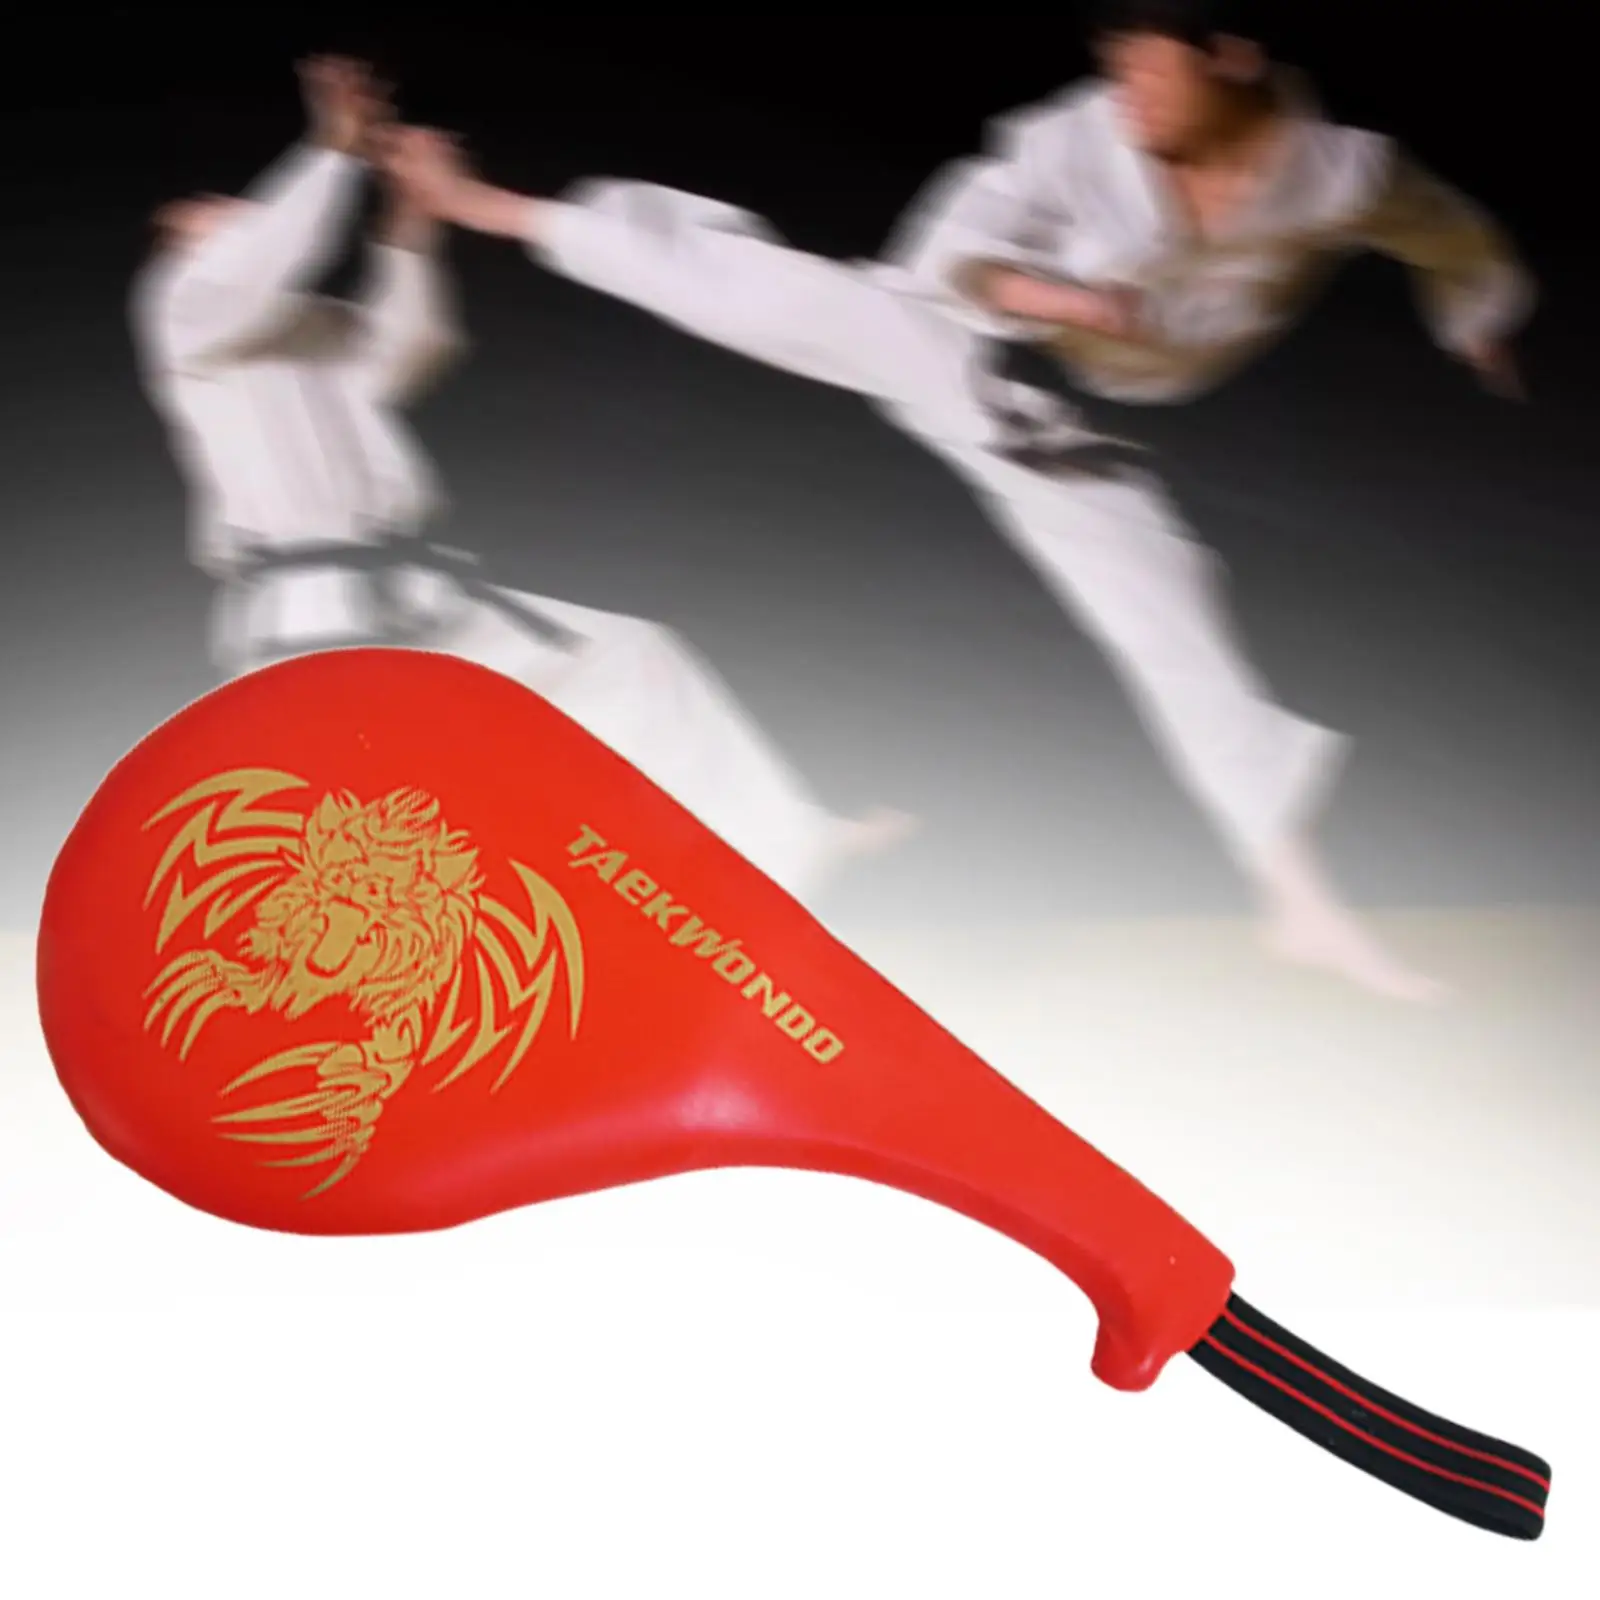 Taekwondo Kick Pad Practice Kick Target for Sanda Practicing